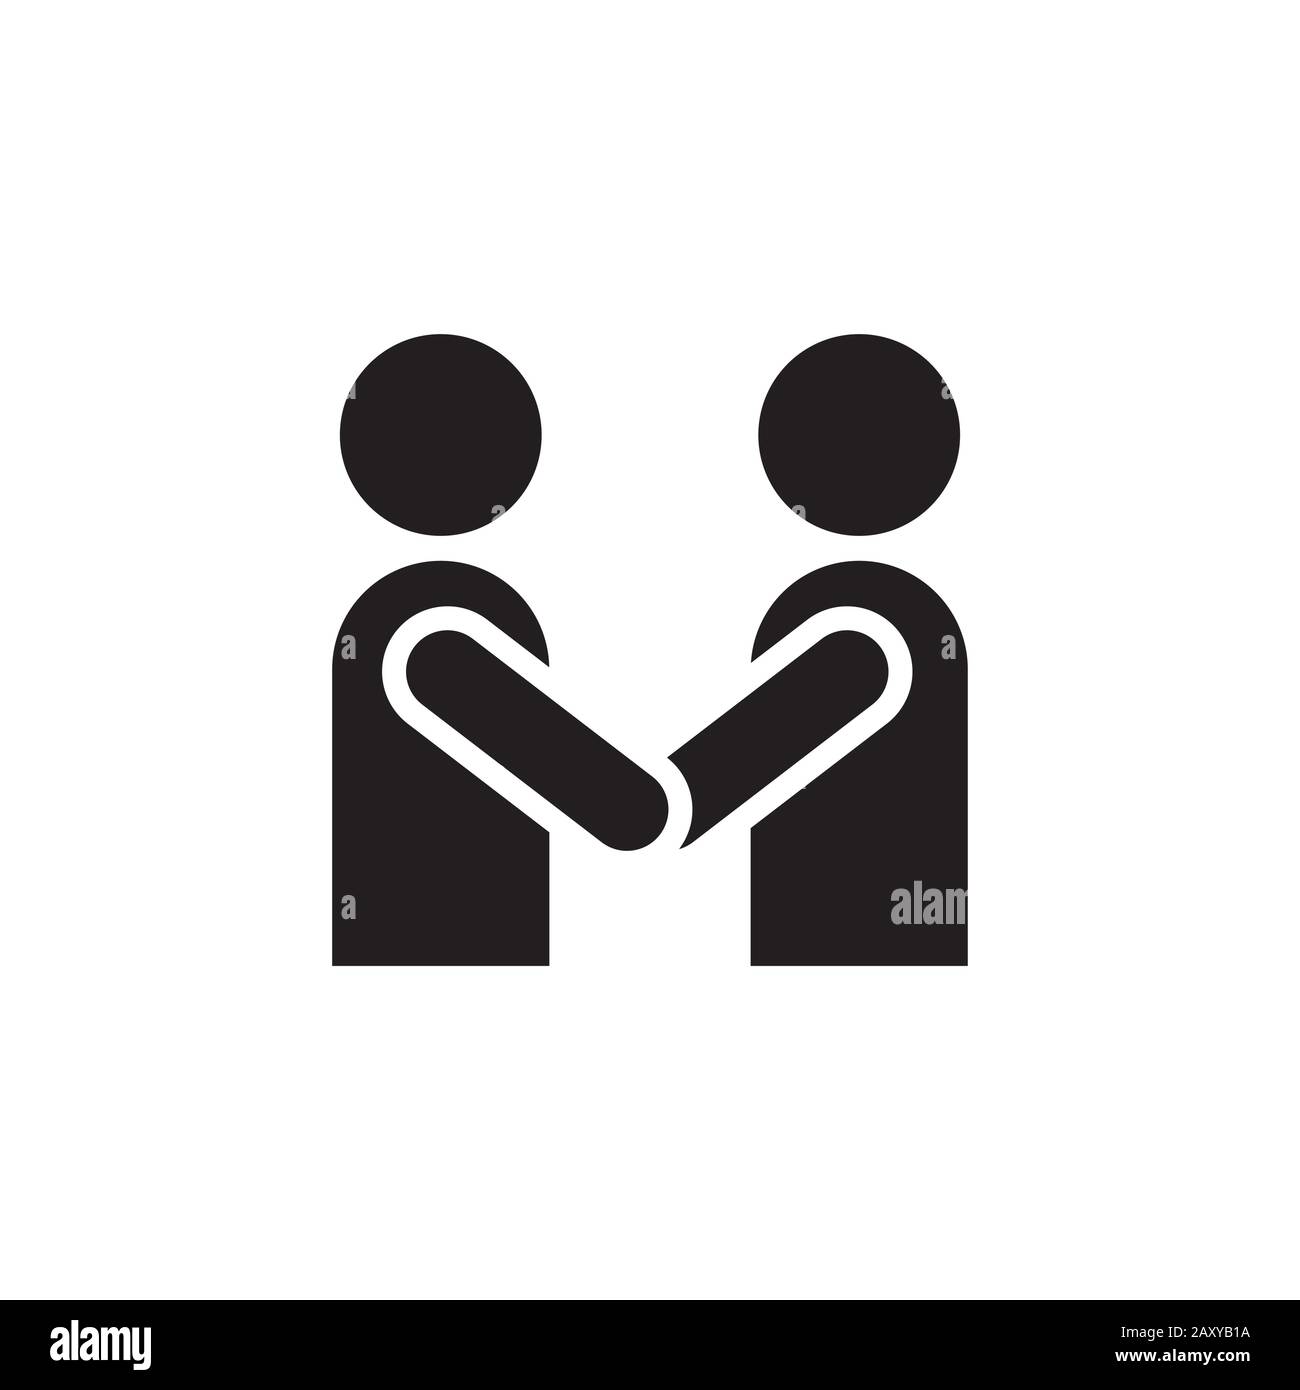 alliance, shake hands icon illustration Stock Vector